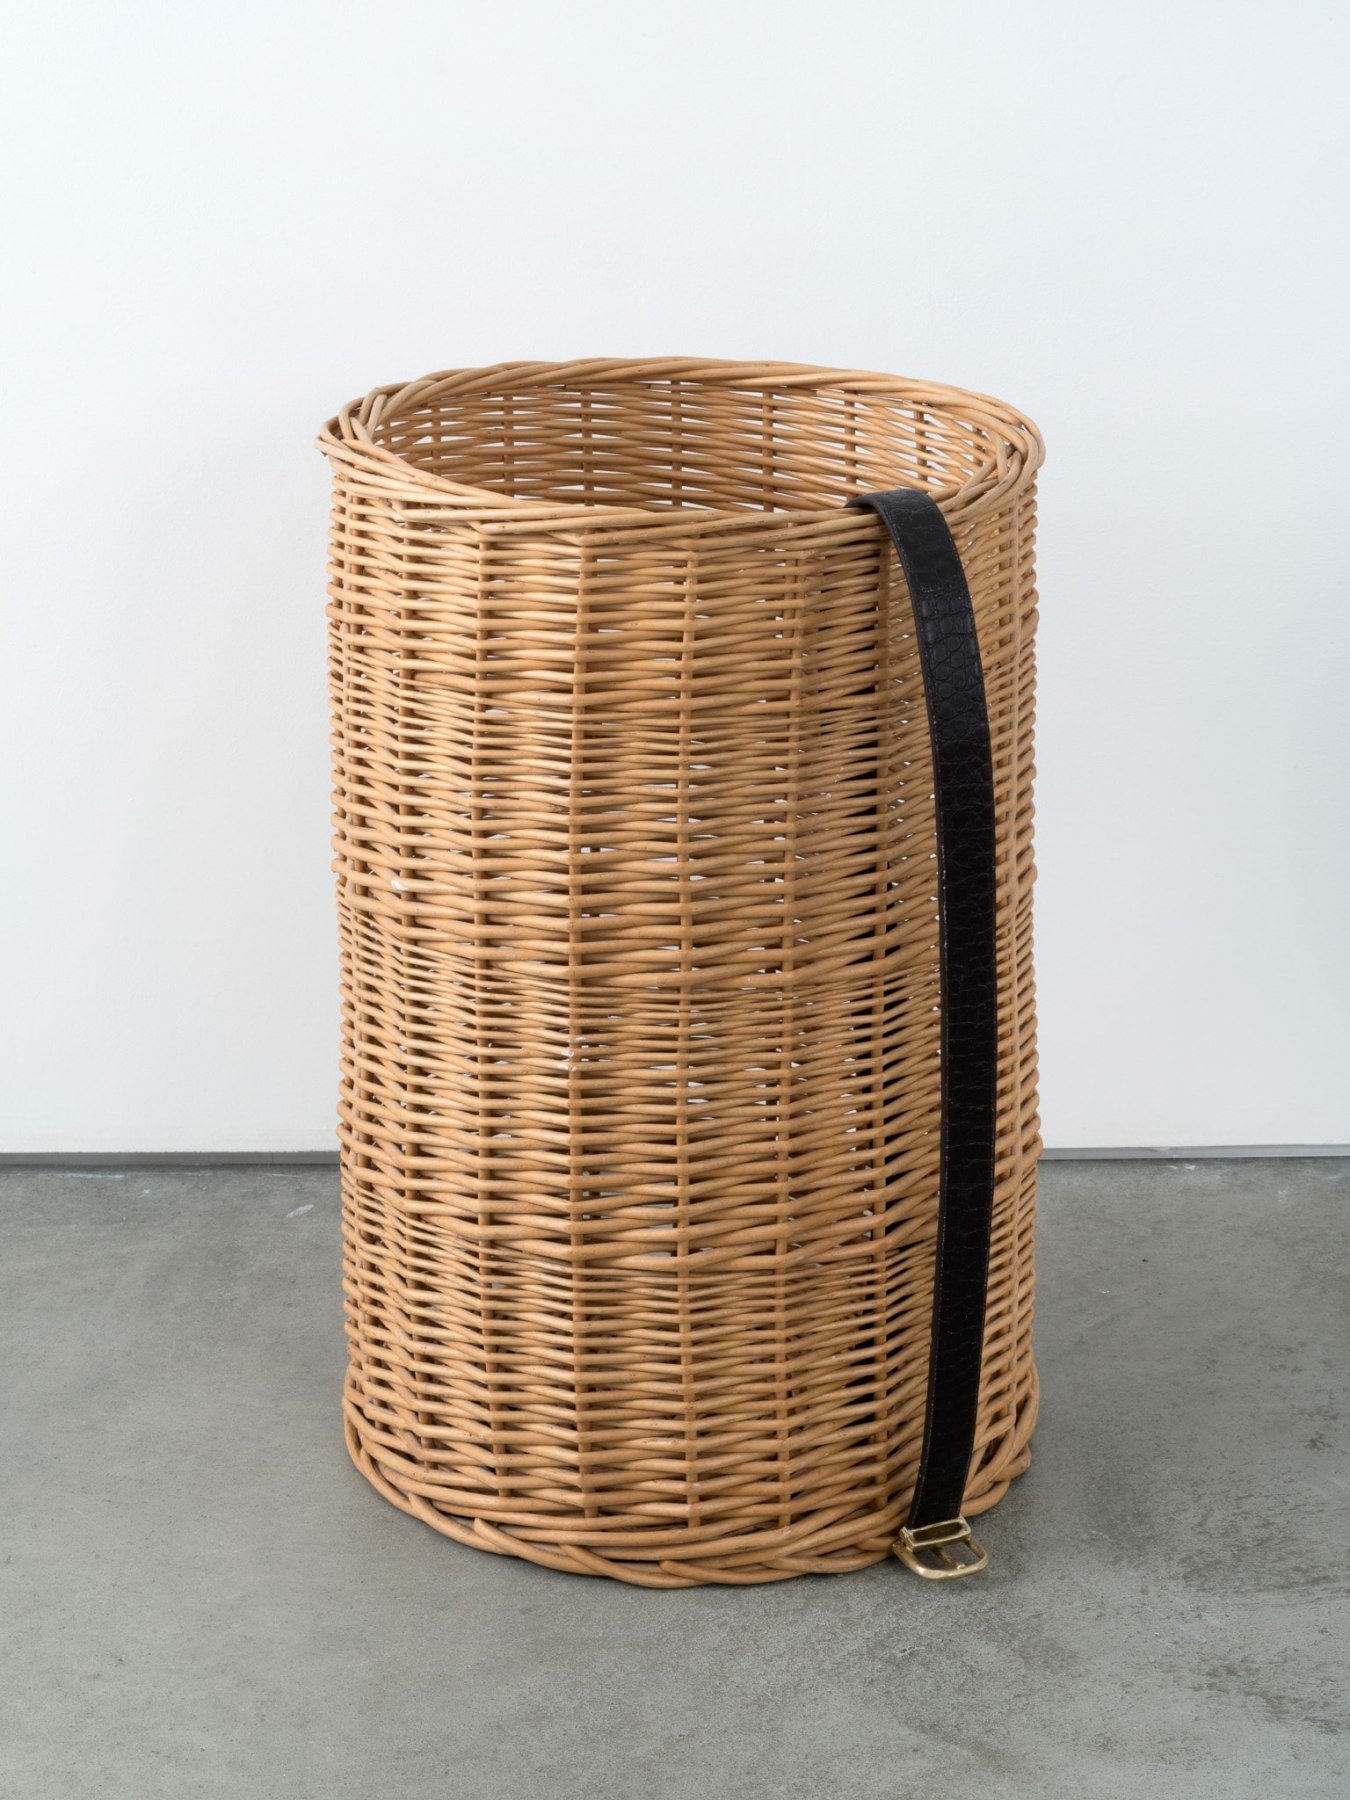 ￼￼Valentin Carron, Belt on rattan basket, 2014